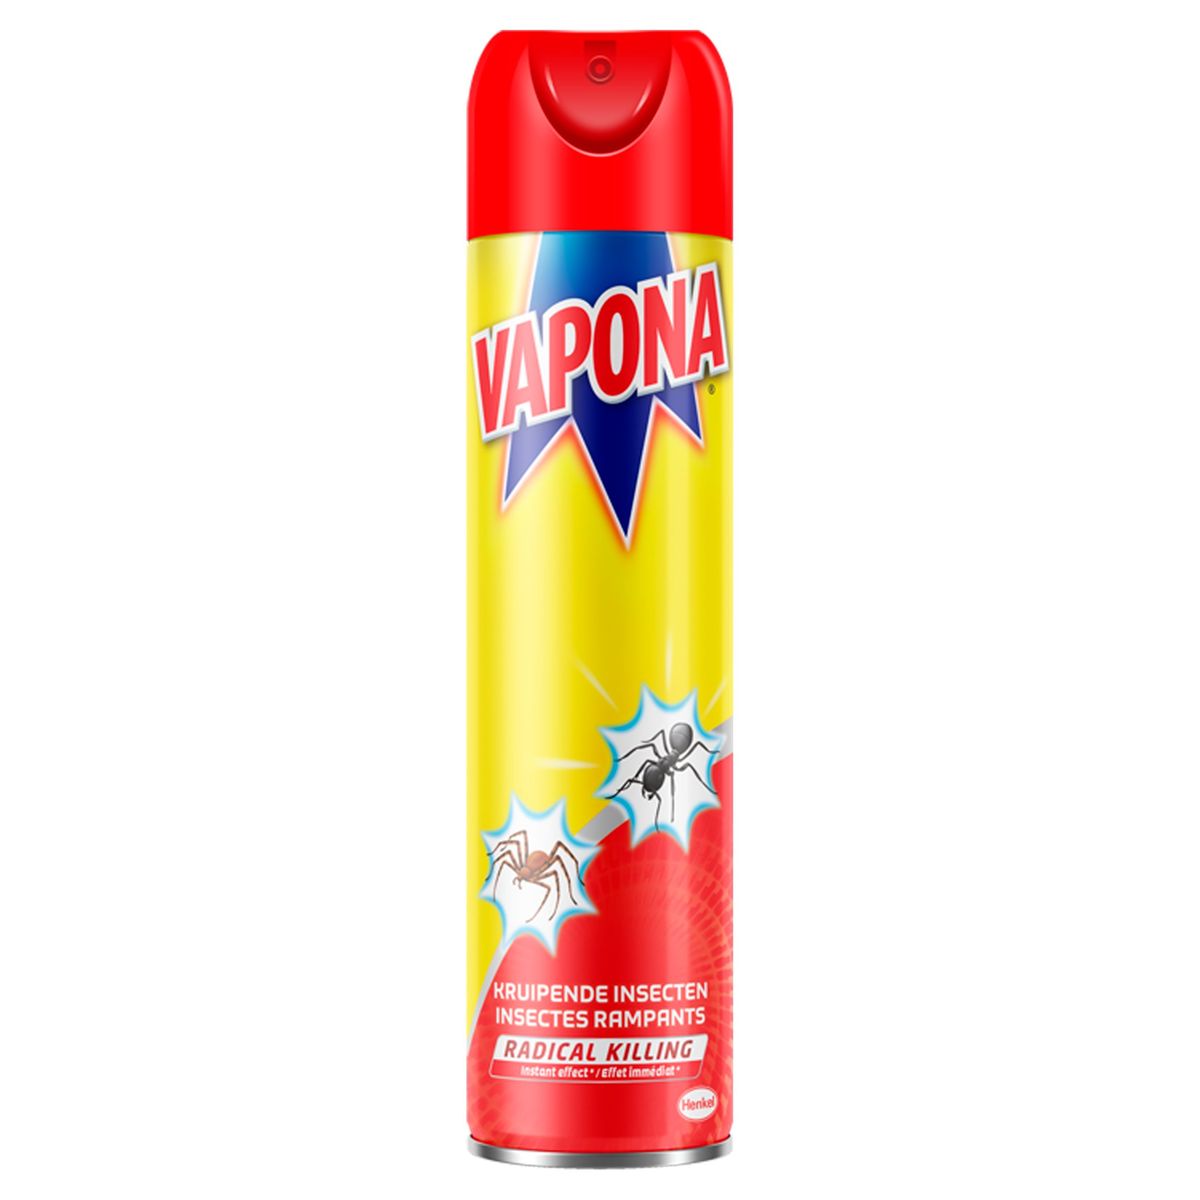 Vapona Kruipende Insecten Spray 400ml